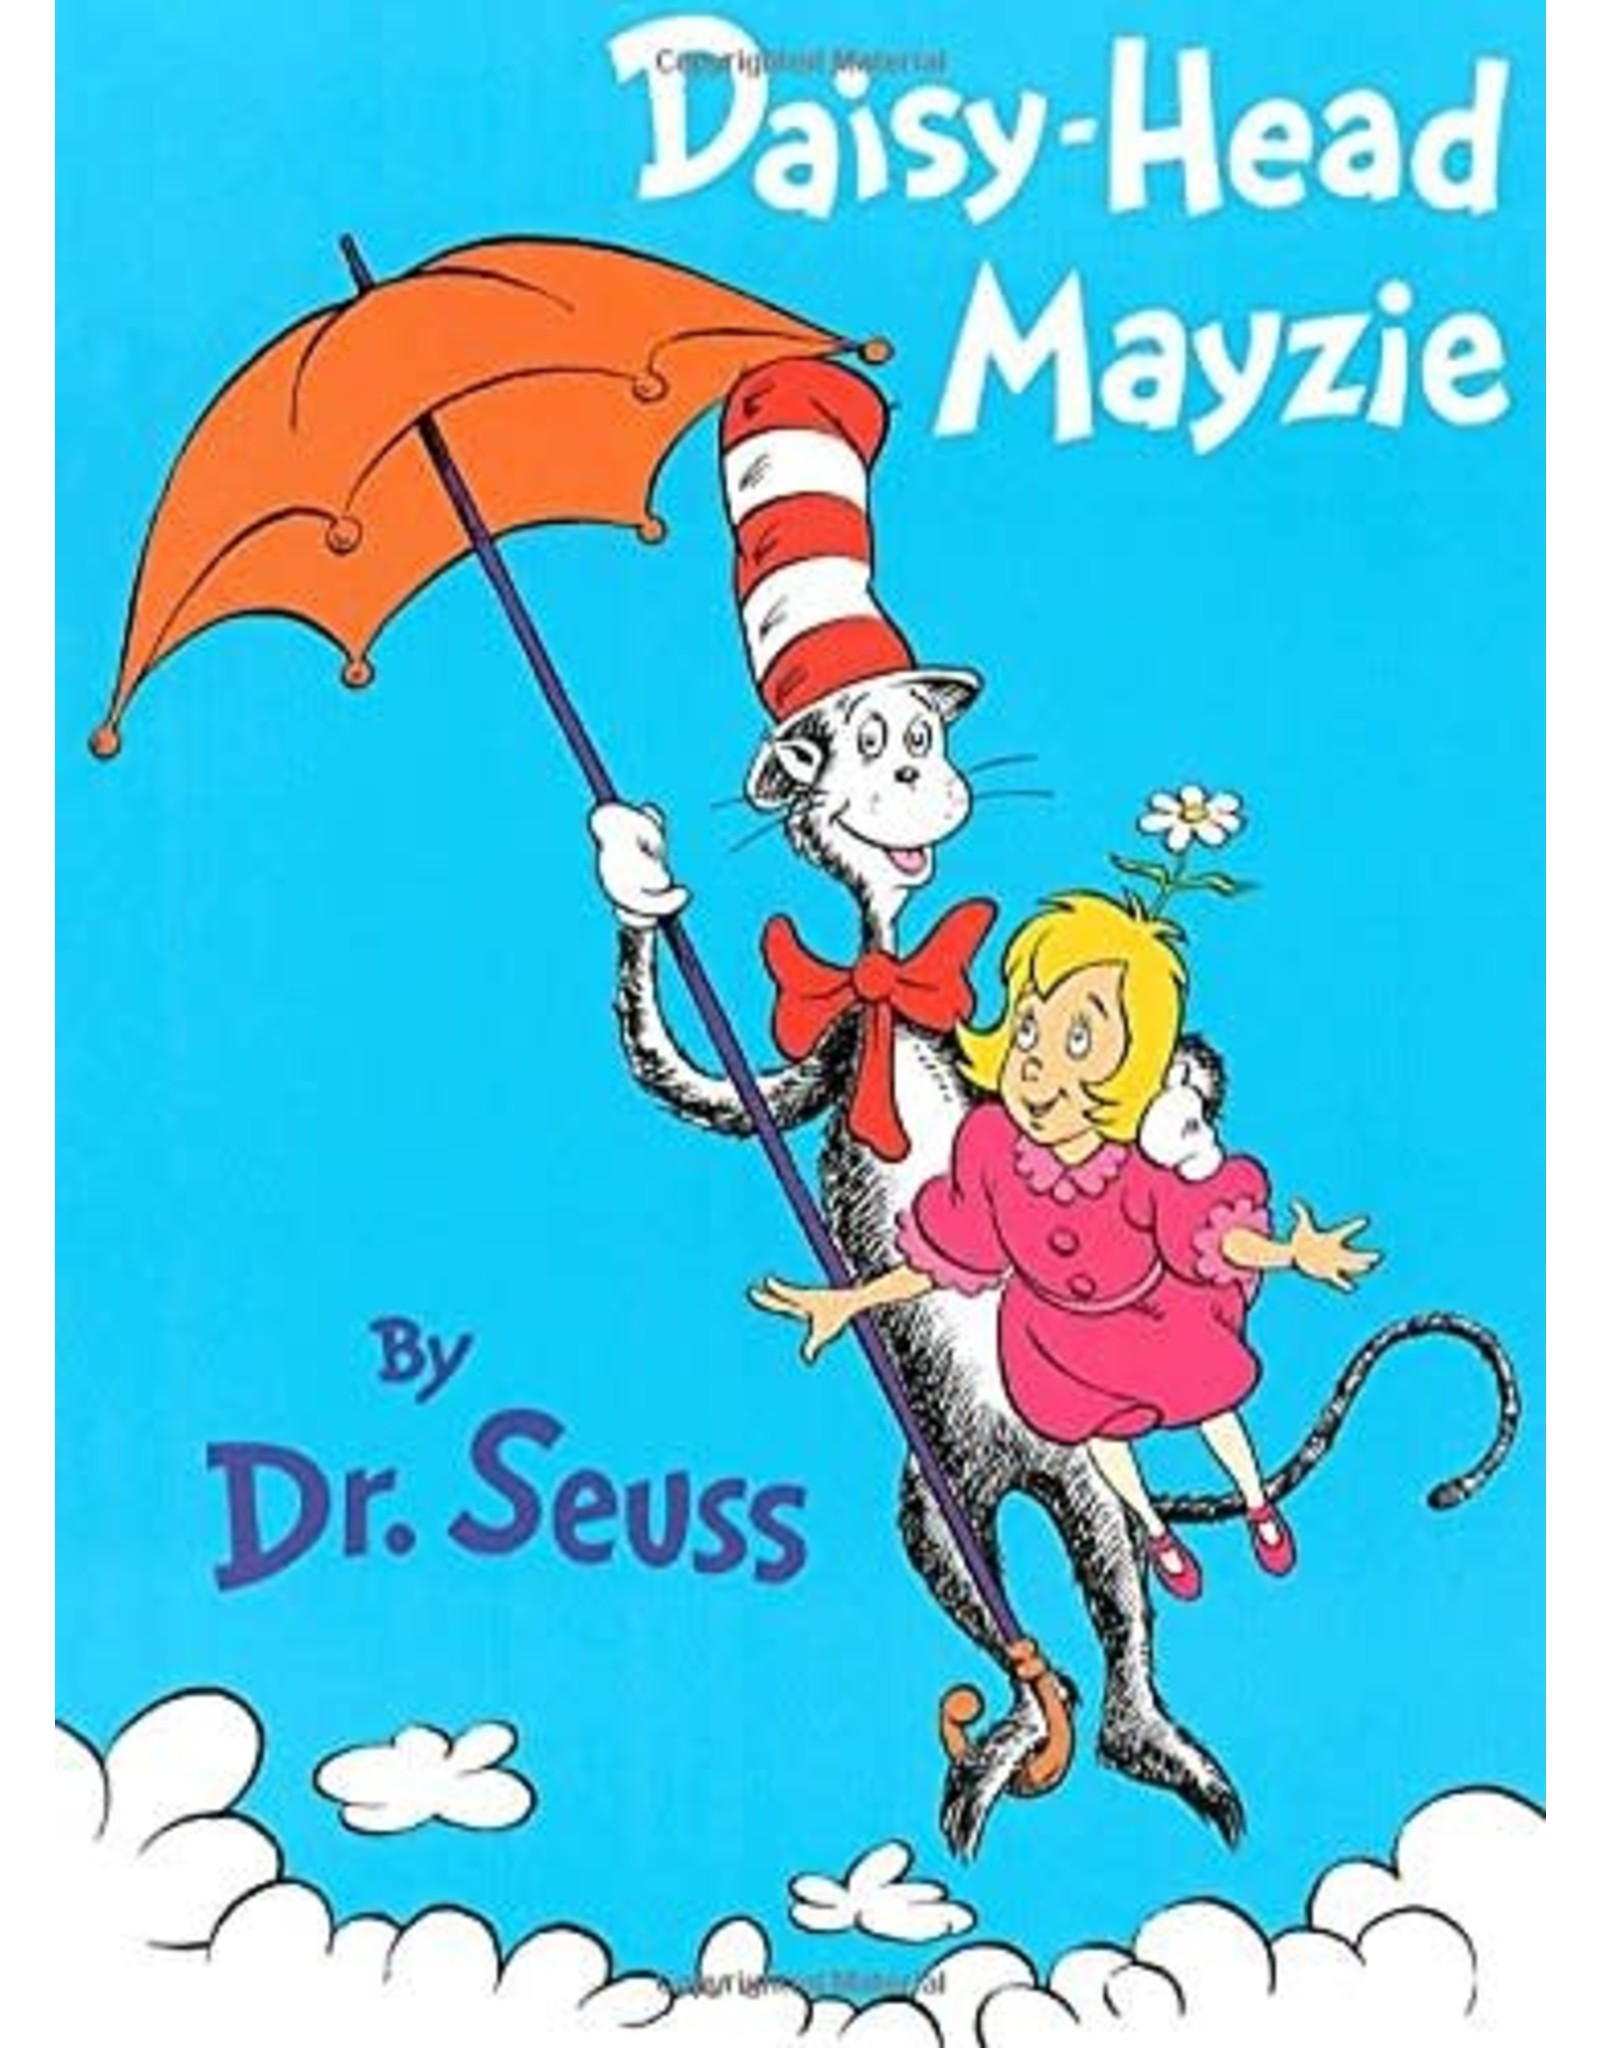 Dr. Seuss Daisy-Head Mayzie by Dr. Seuss - large